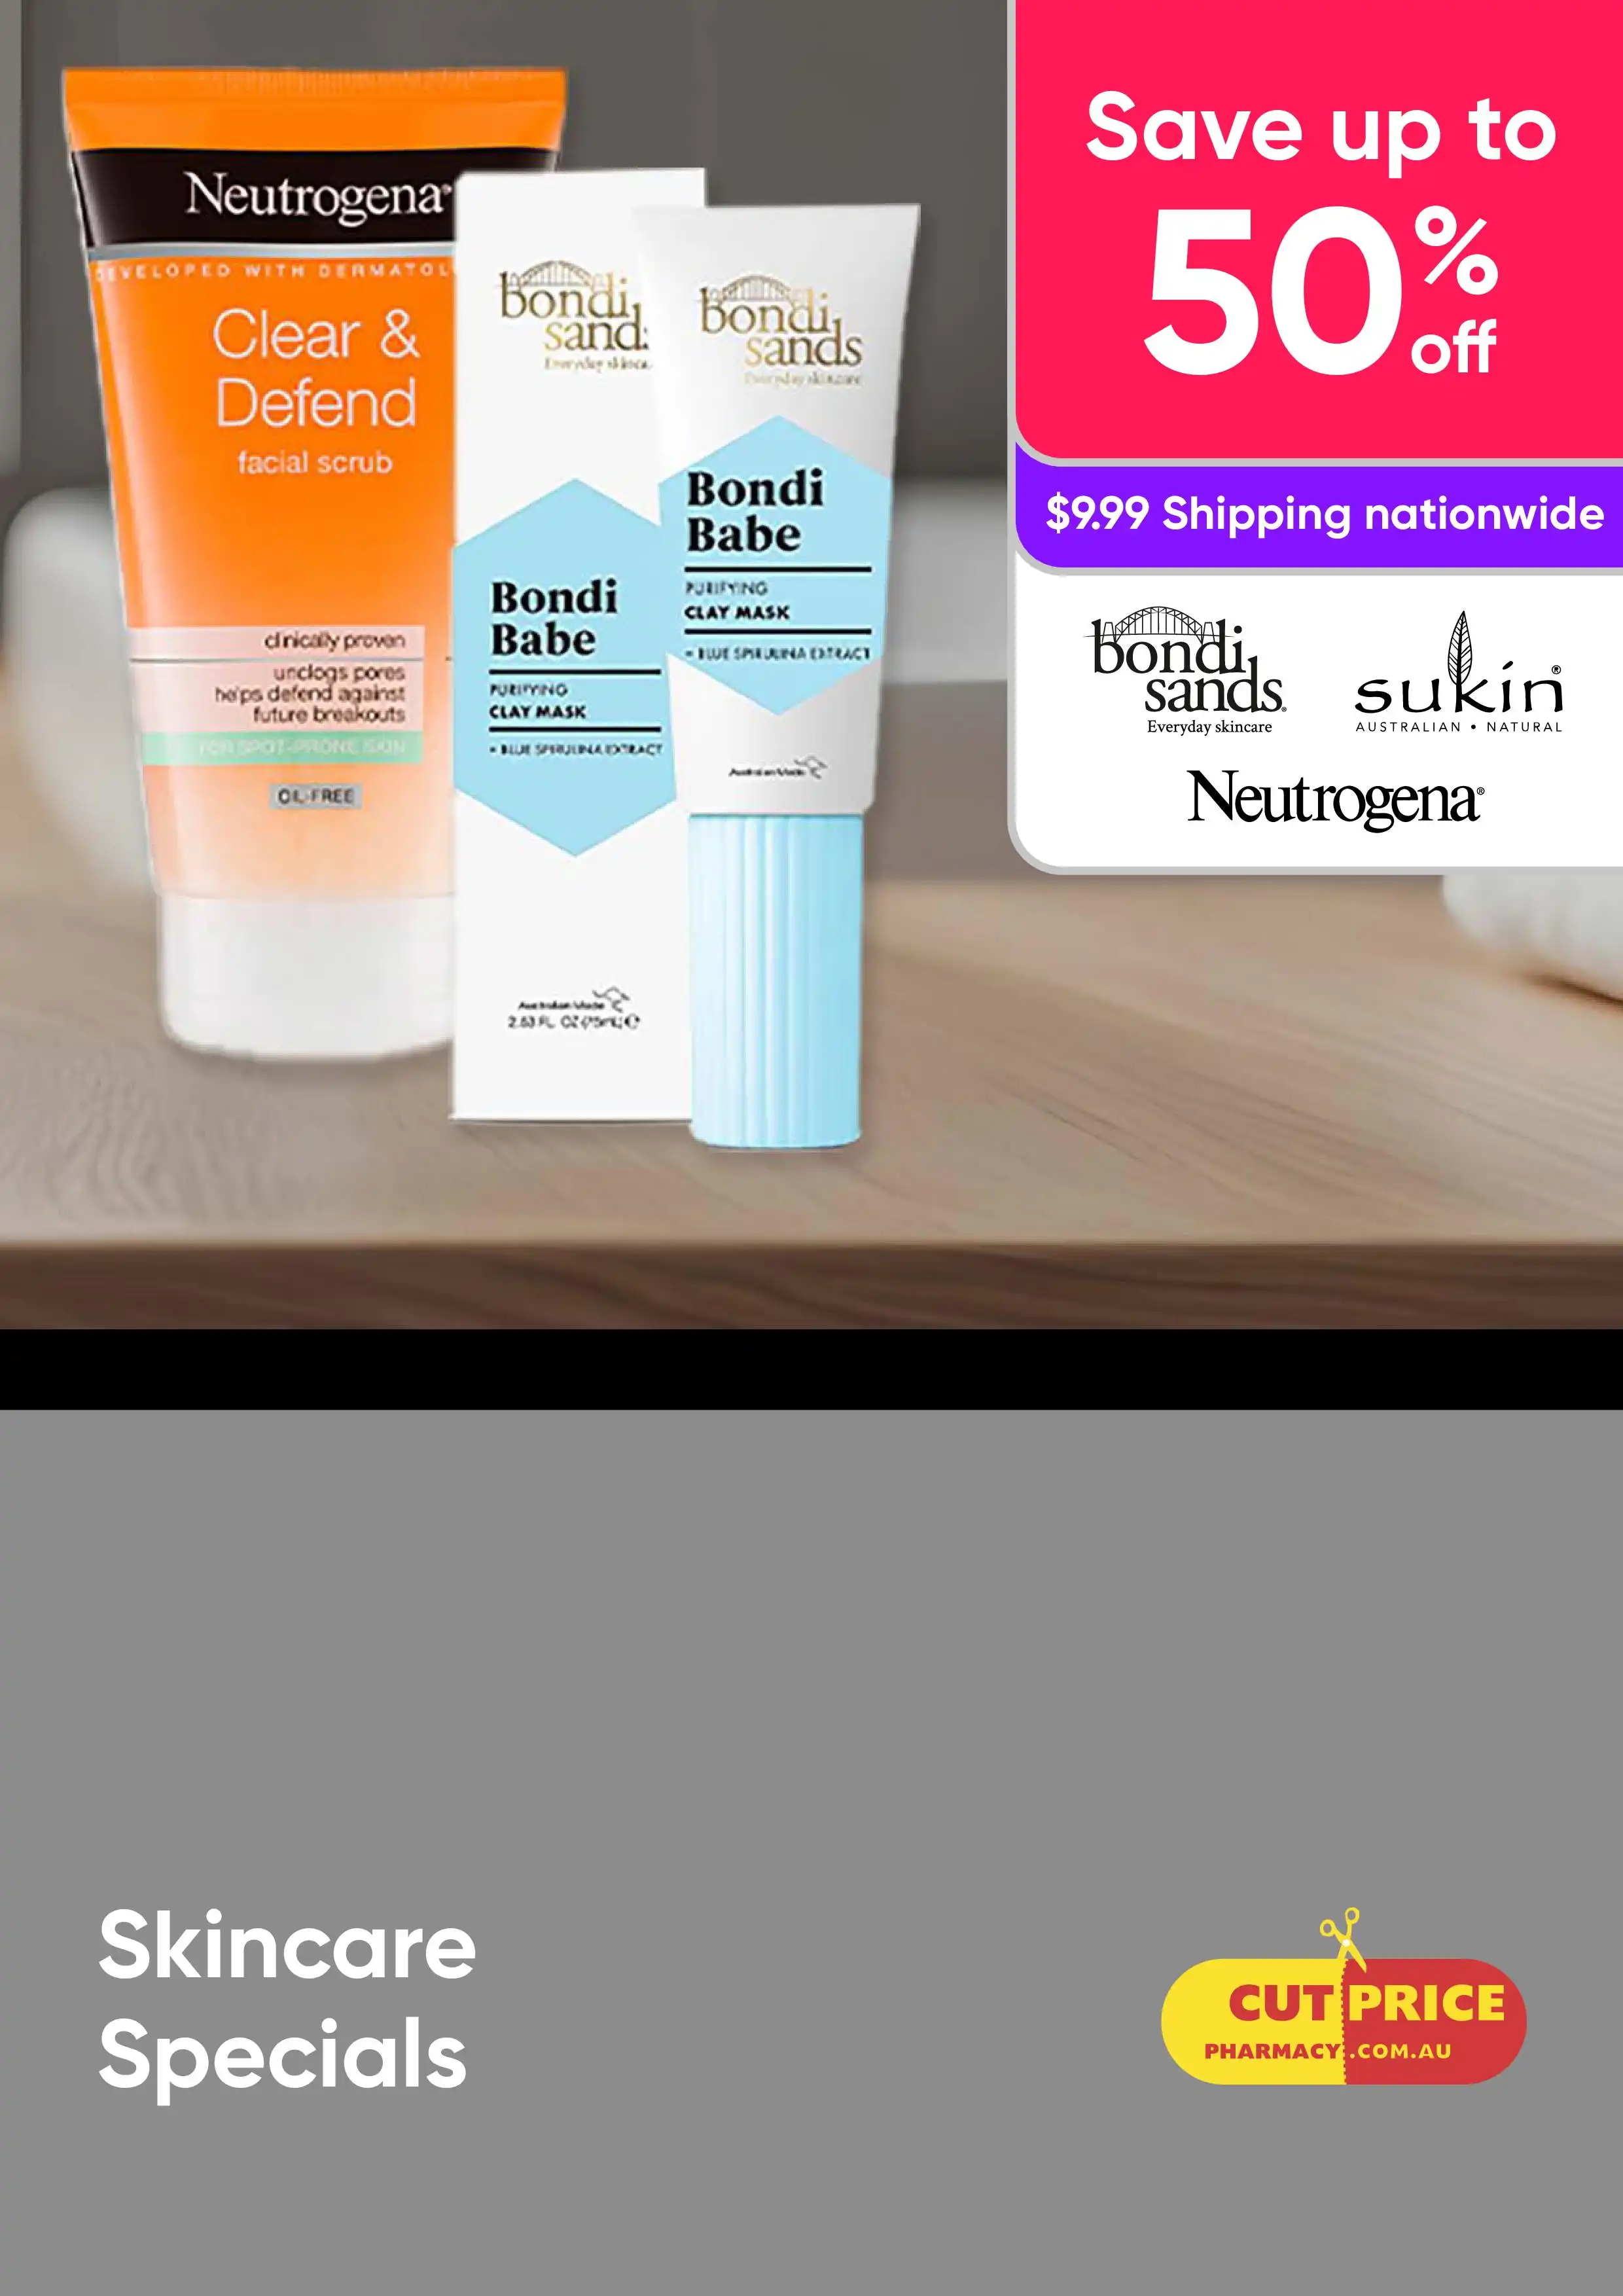 Bondi Sands, Neutrogena, Sukin & other Skincare Brands up to 50% Off